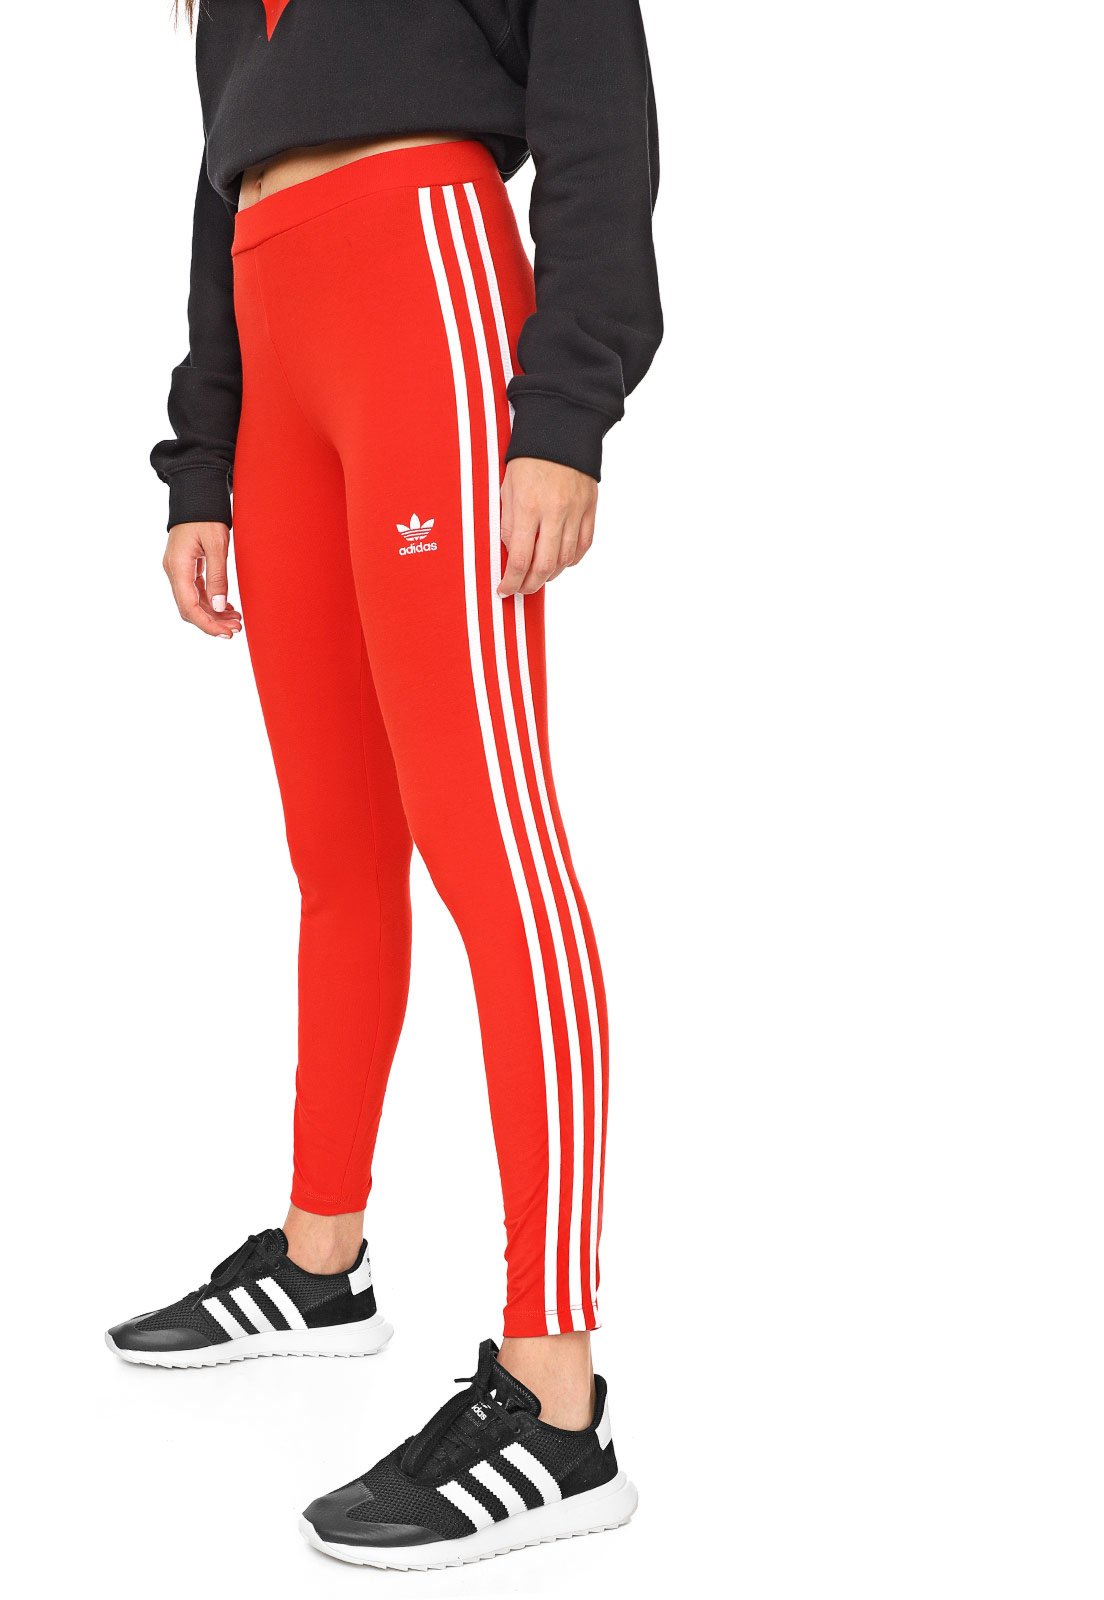 Legging Adidas 3 Stripes - Feminina